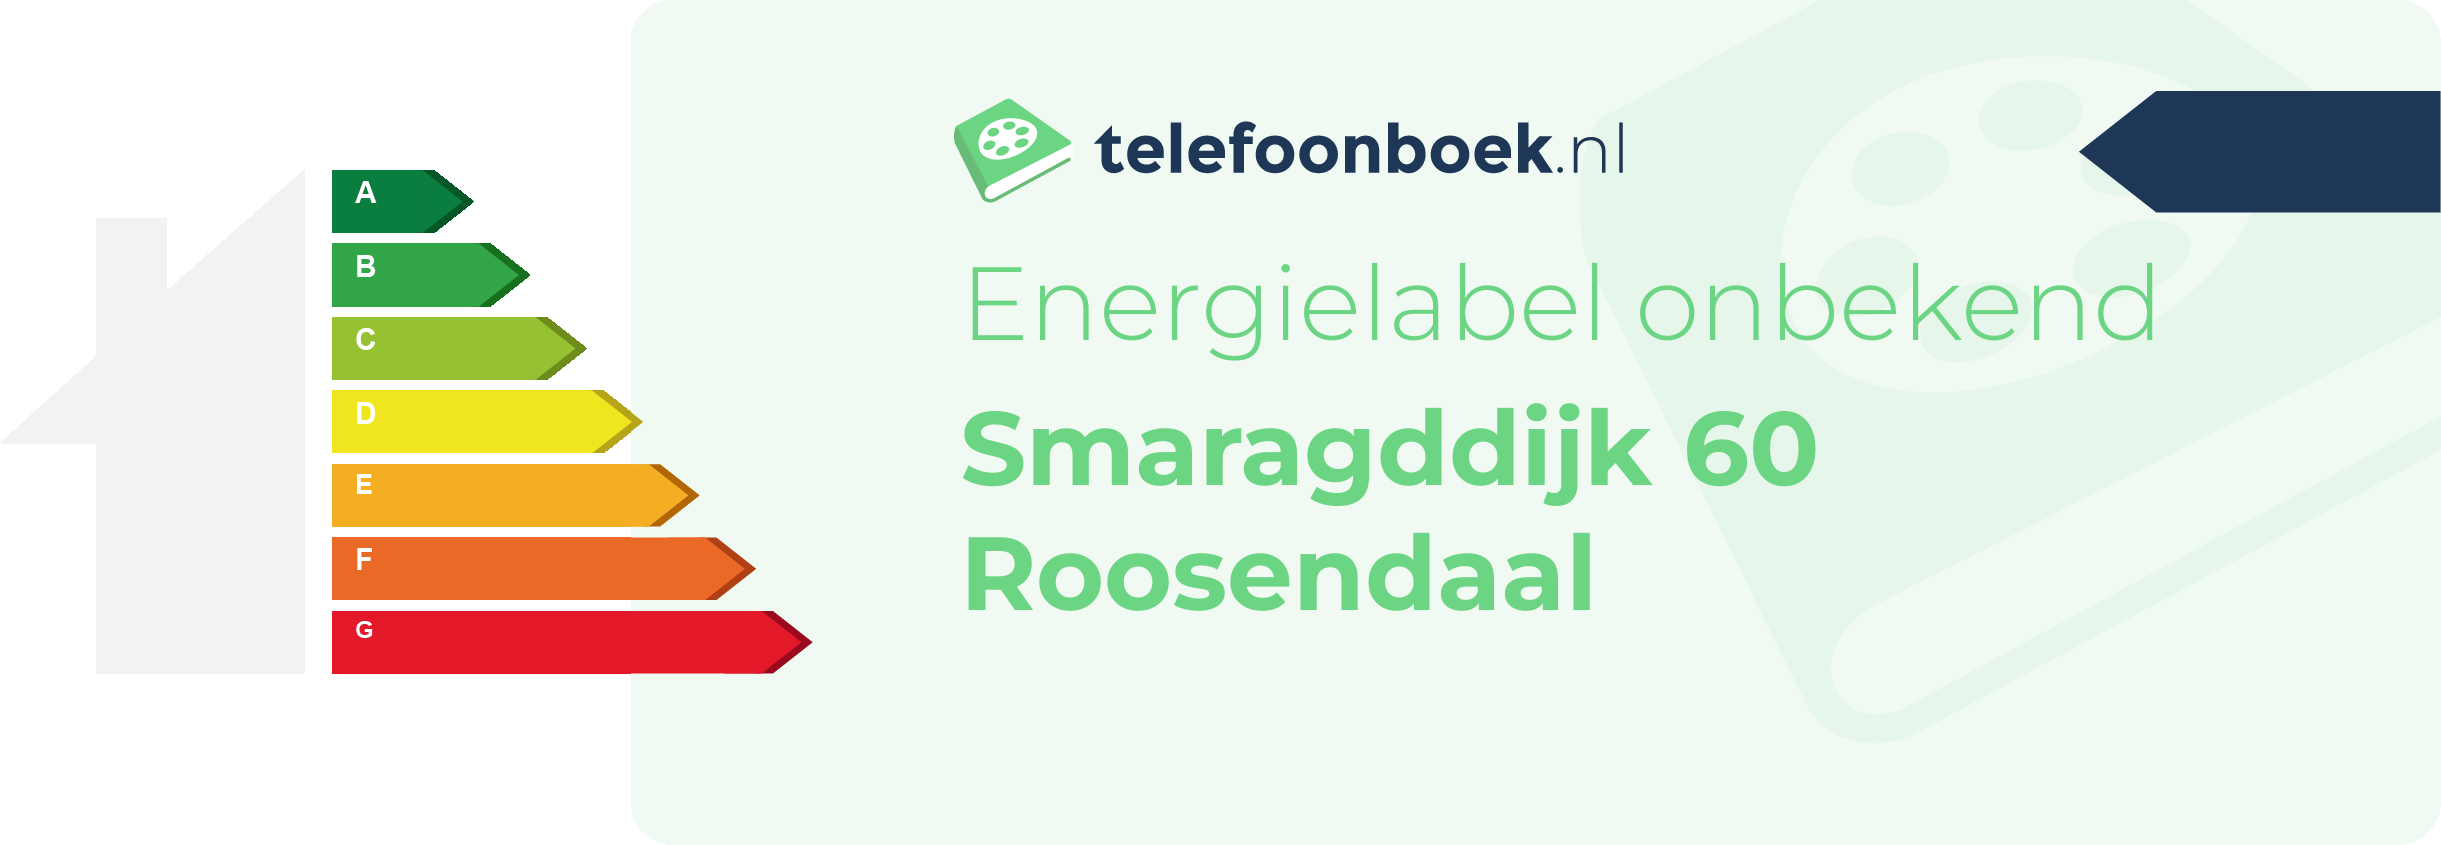 Energielabel Smaragddijk 60 Roosendaal